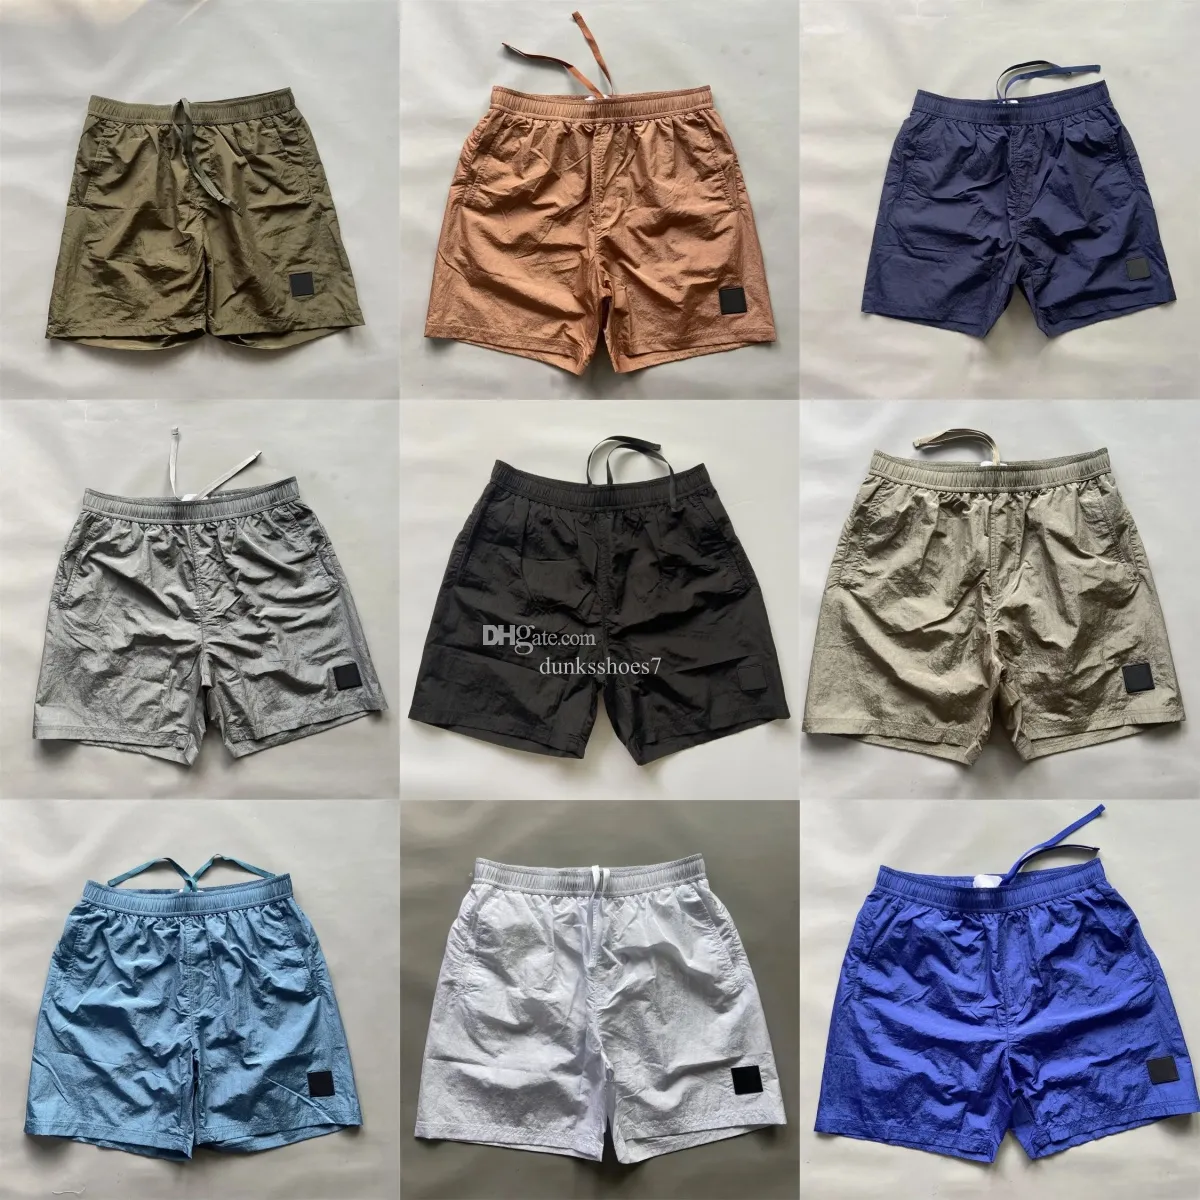 Stone Shorts Compass Embroidery Designer Mens Metal Nylon Shorts Fashion Hight Street Sports Shorts Quick Drying SwimWear Man Beach Pants